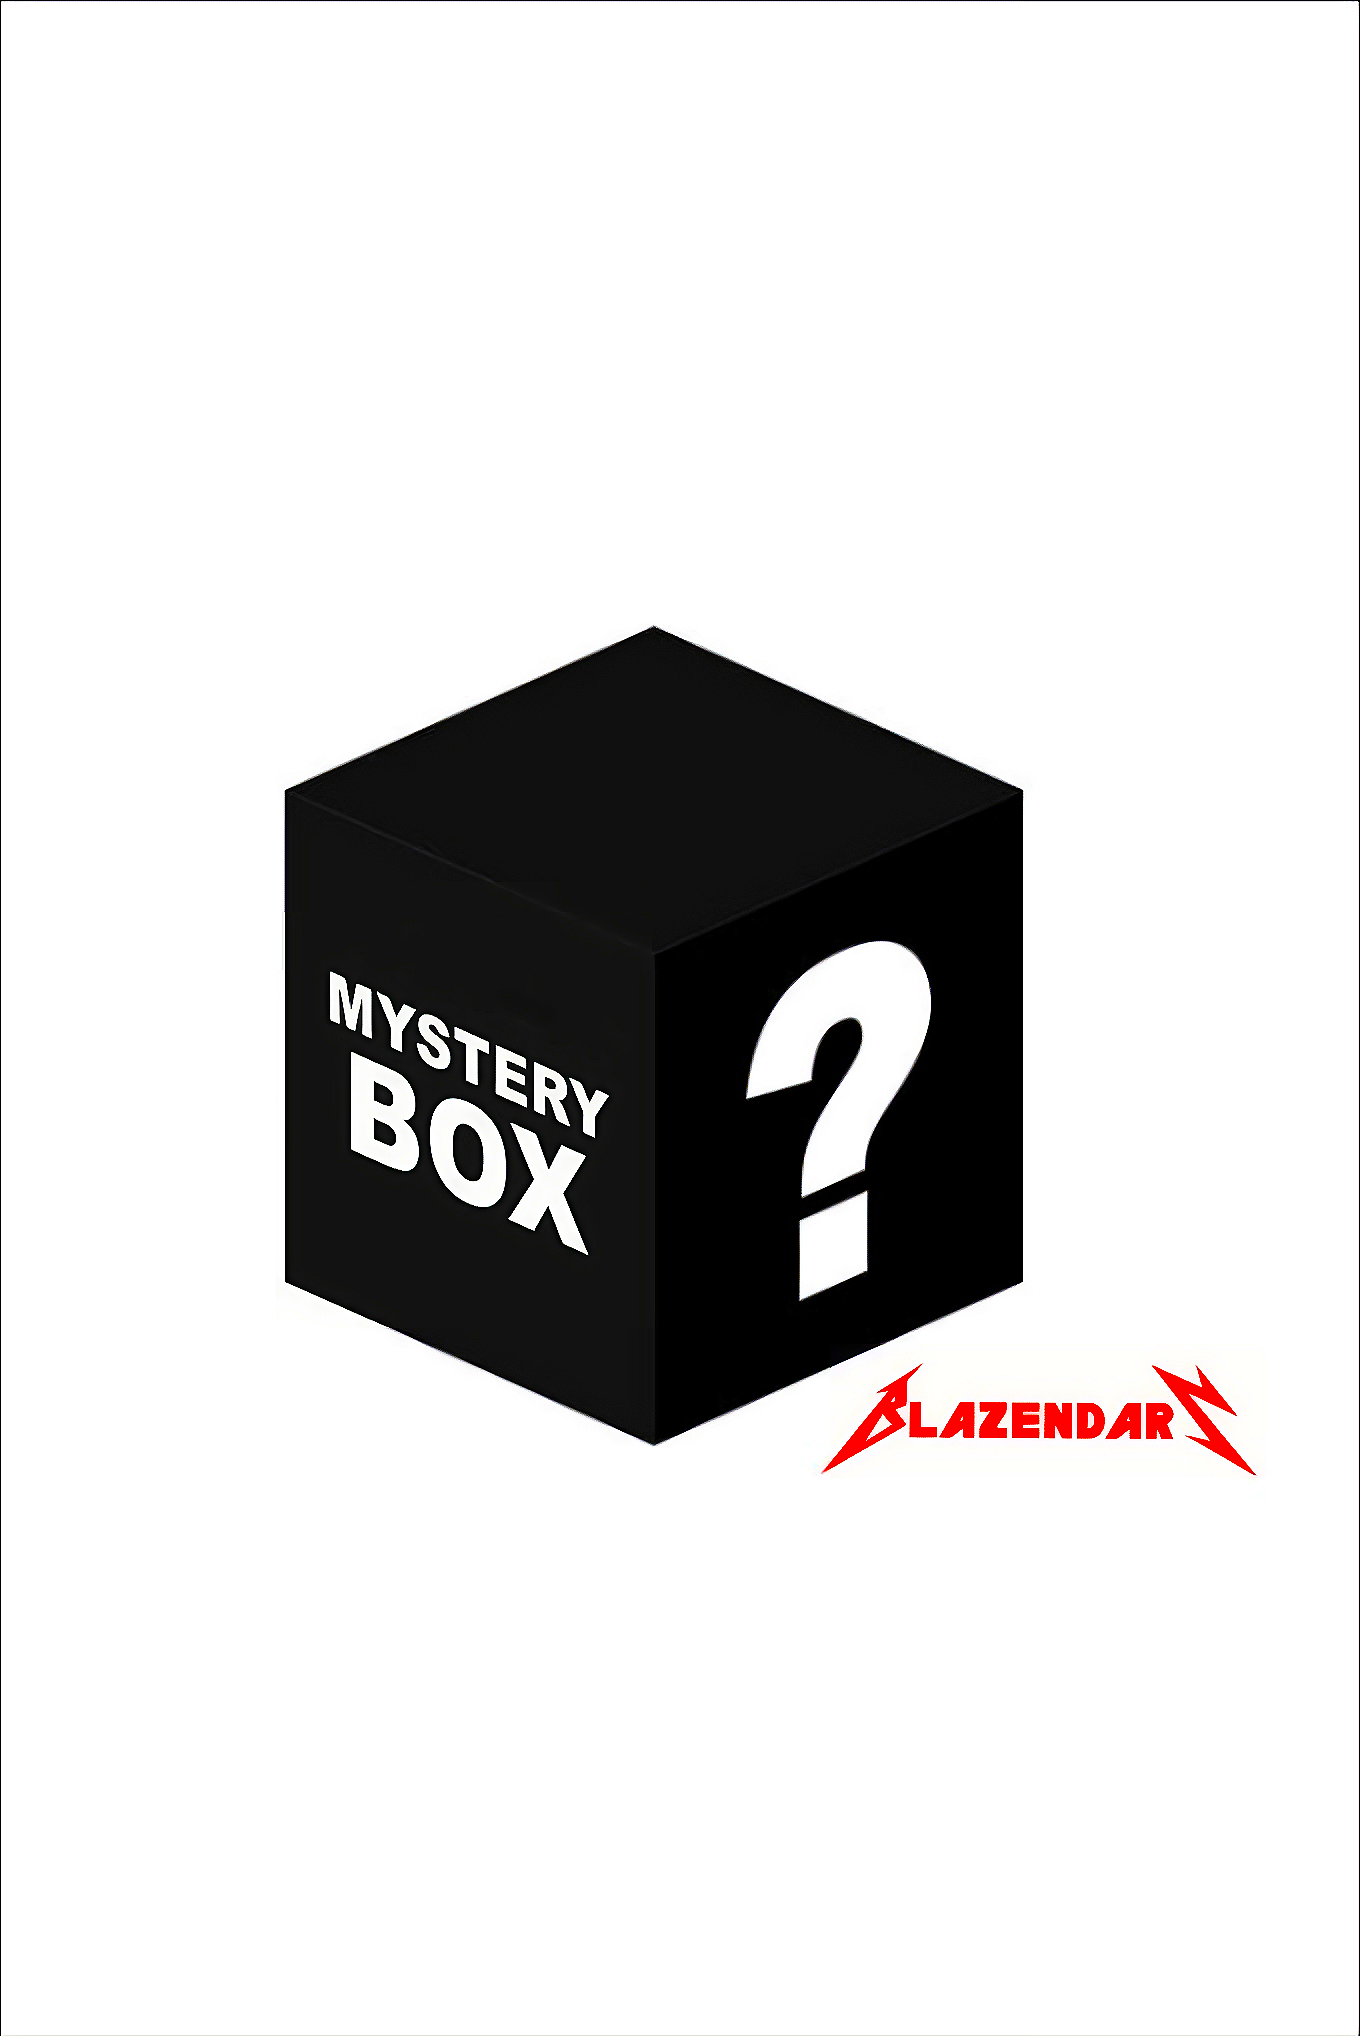 CLOTHING MYSTERY BOX